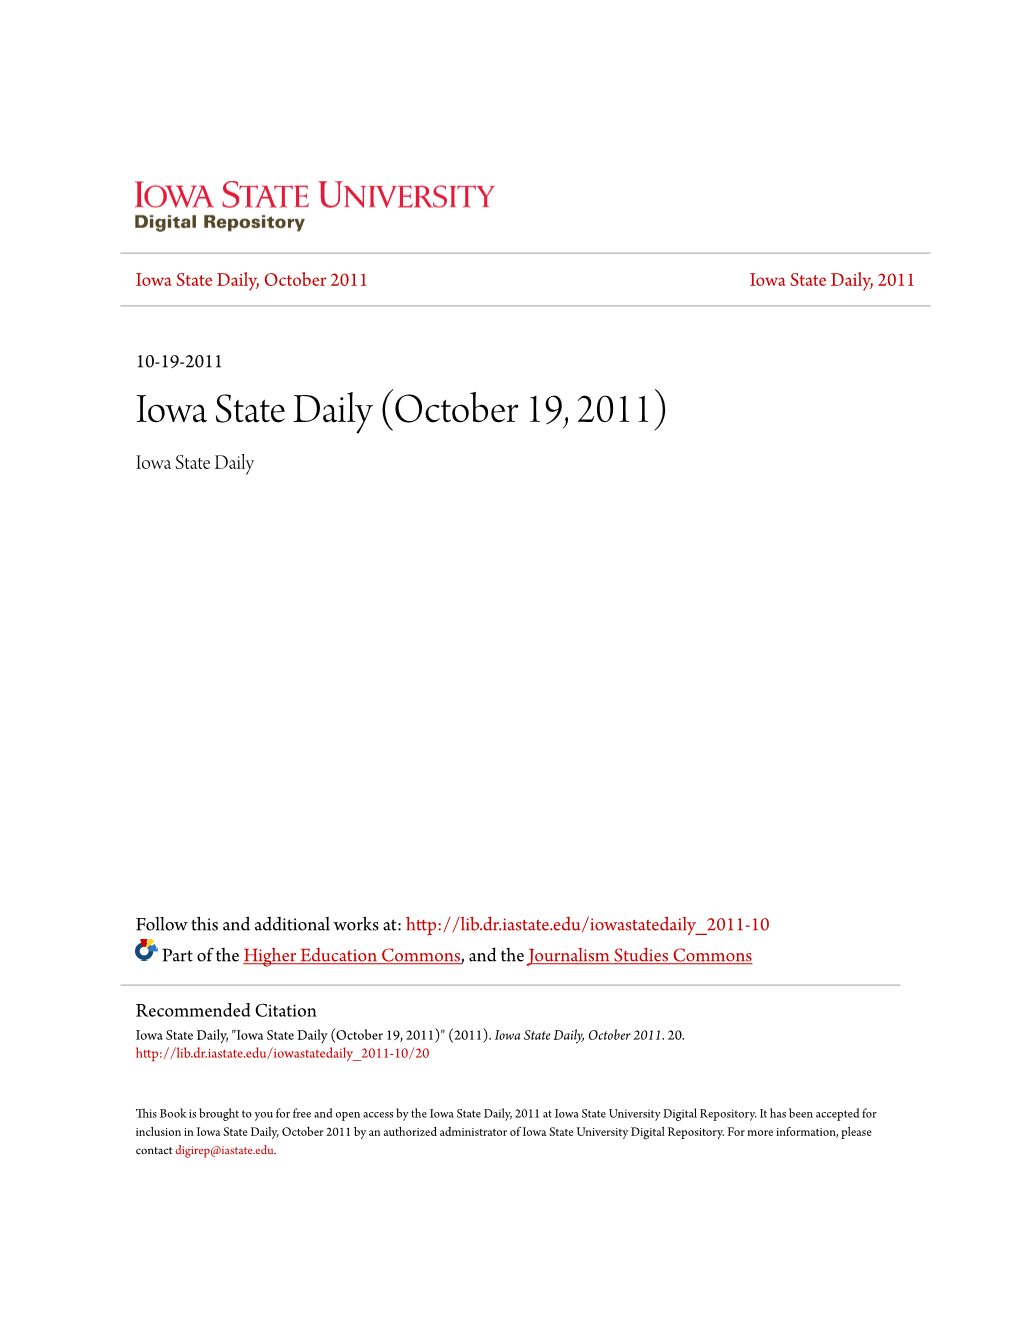 Iowa State Daily (October 19, 2011) Iowa State Daily